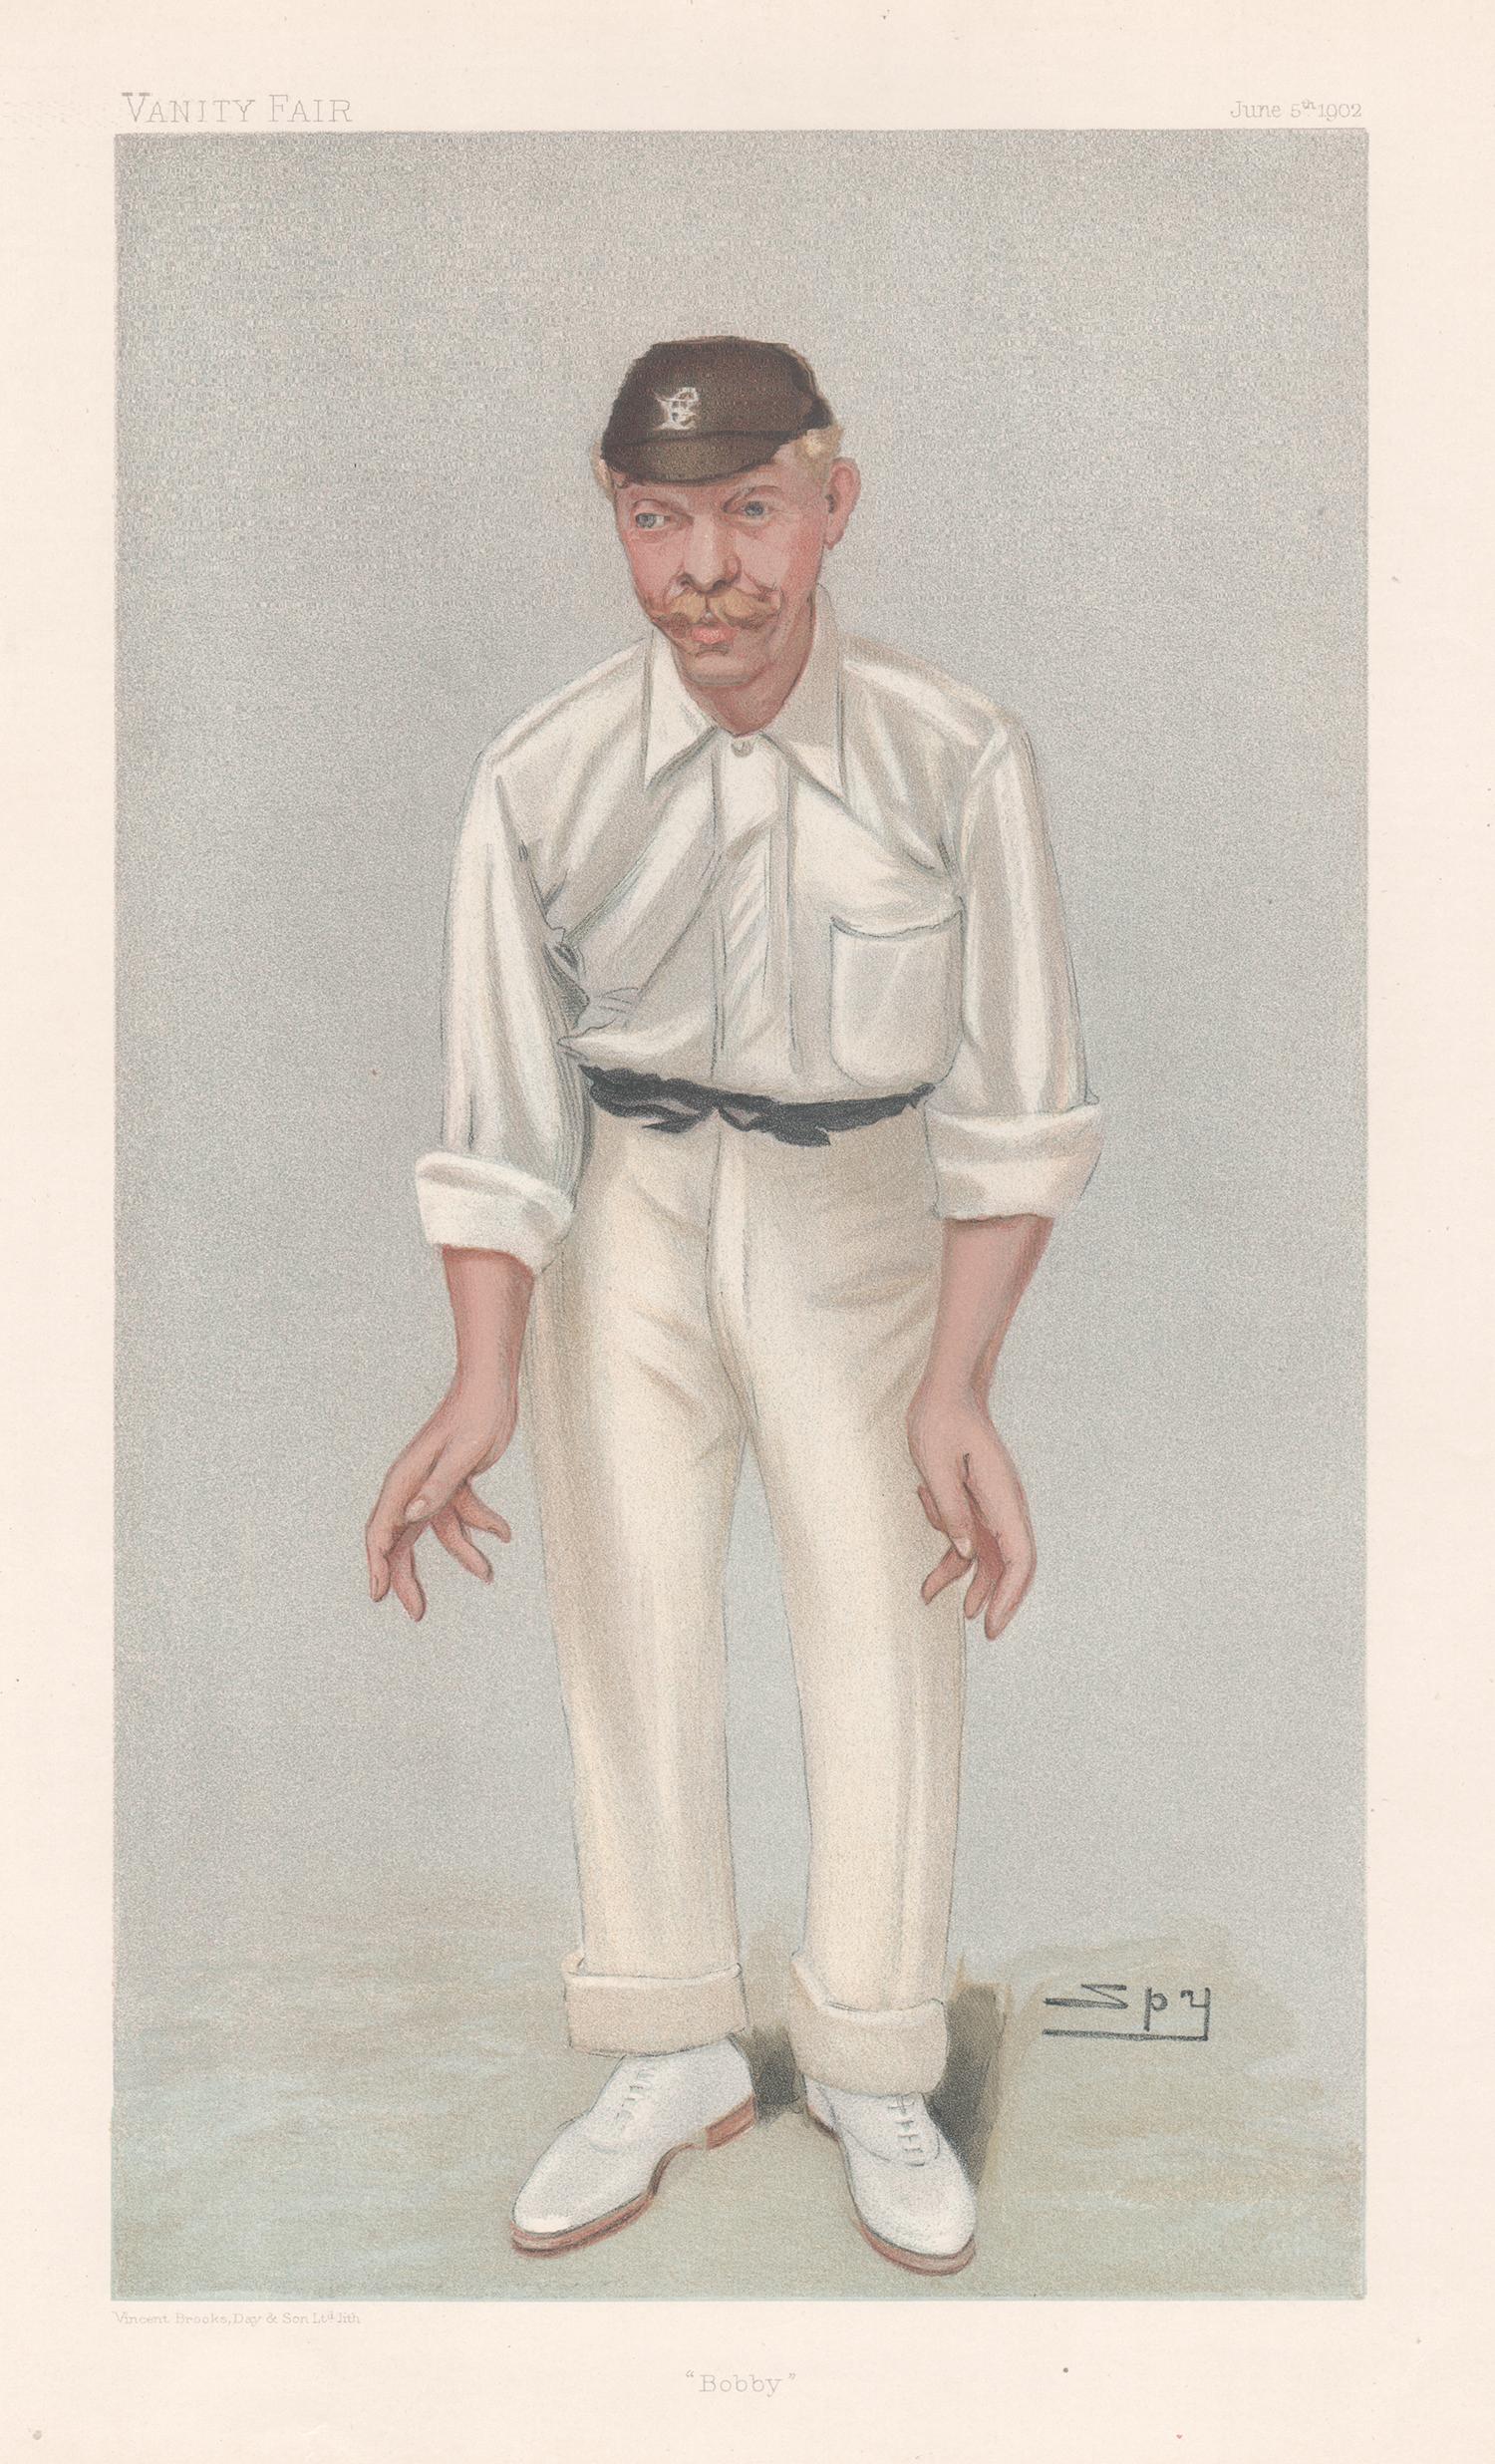 Robert Abel, Vanity Fair cricket portrait chromolithograph, 1902